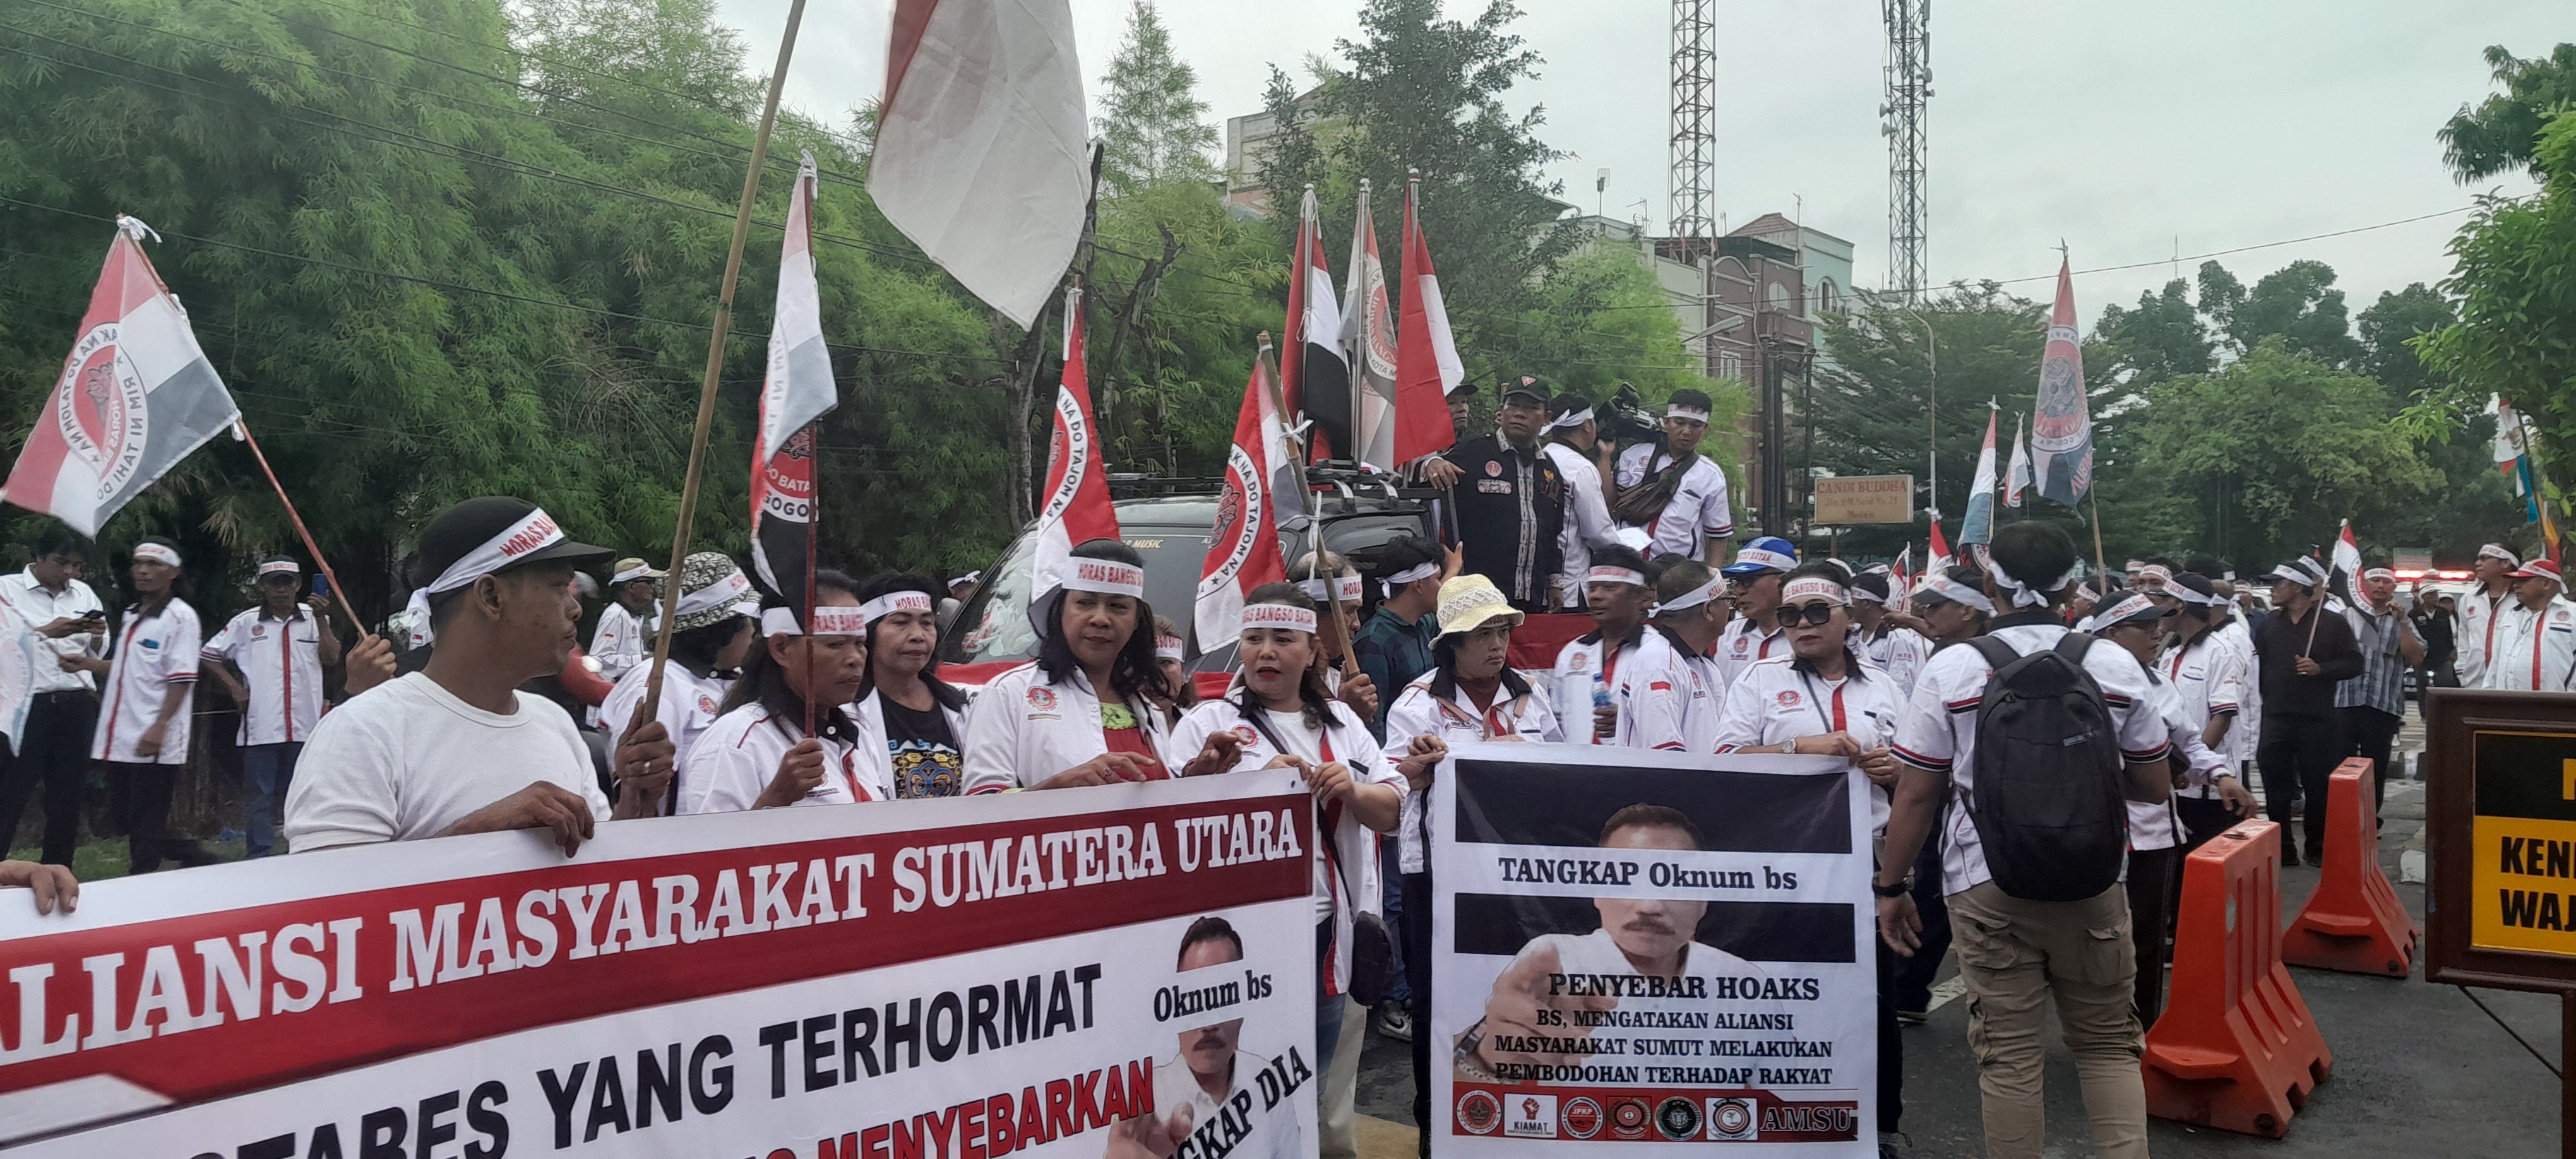 Diduga sebarkan fitnah, HBB dan Aliansi Masyarakat Sumatra Utara Meminta Kapolrestabes Medan Tangkap Oknum BS